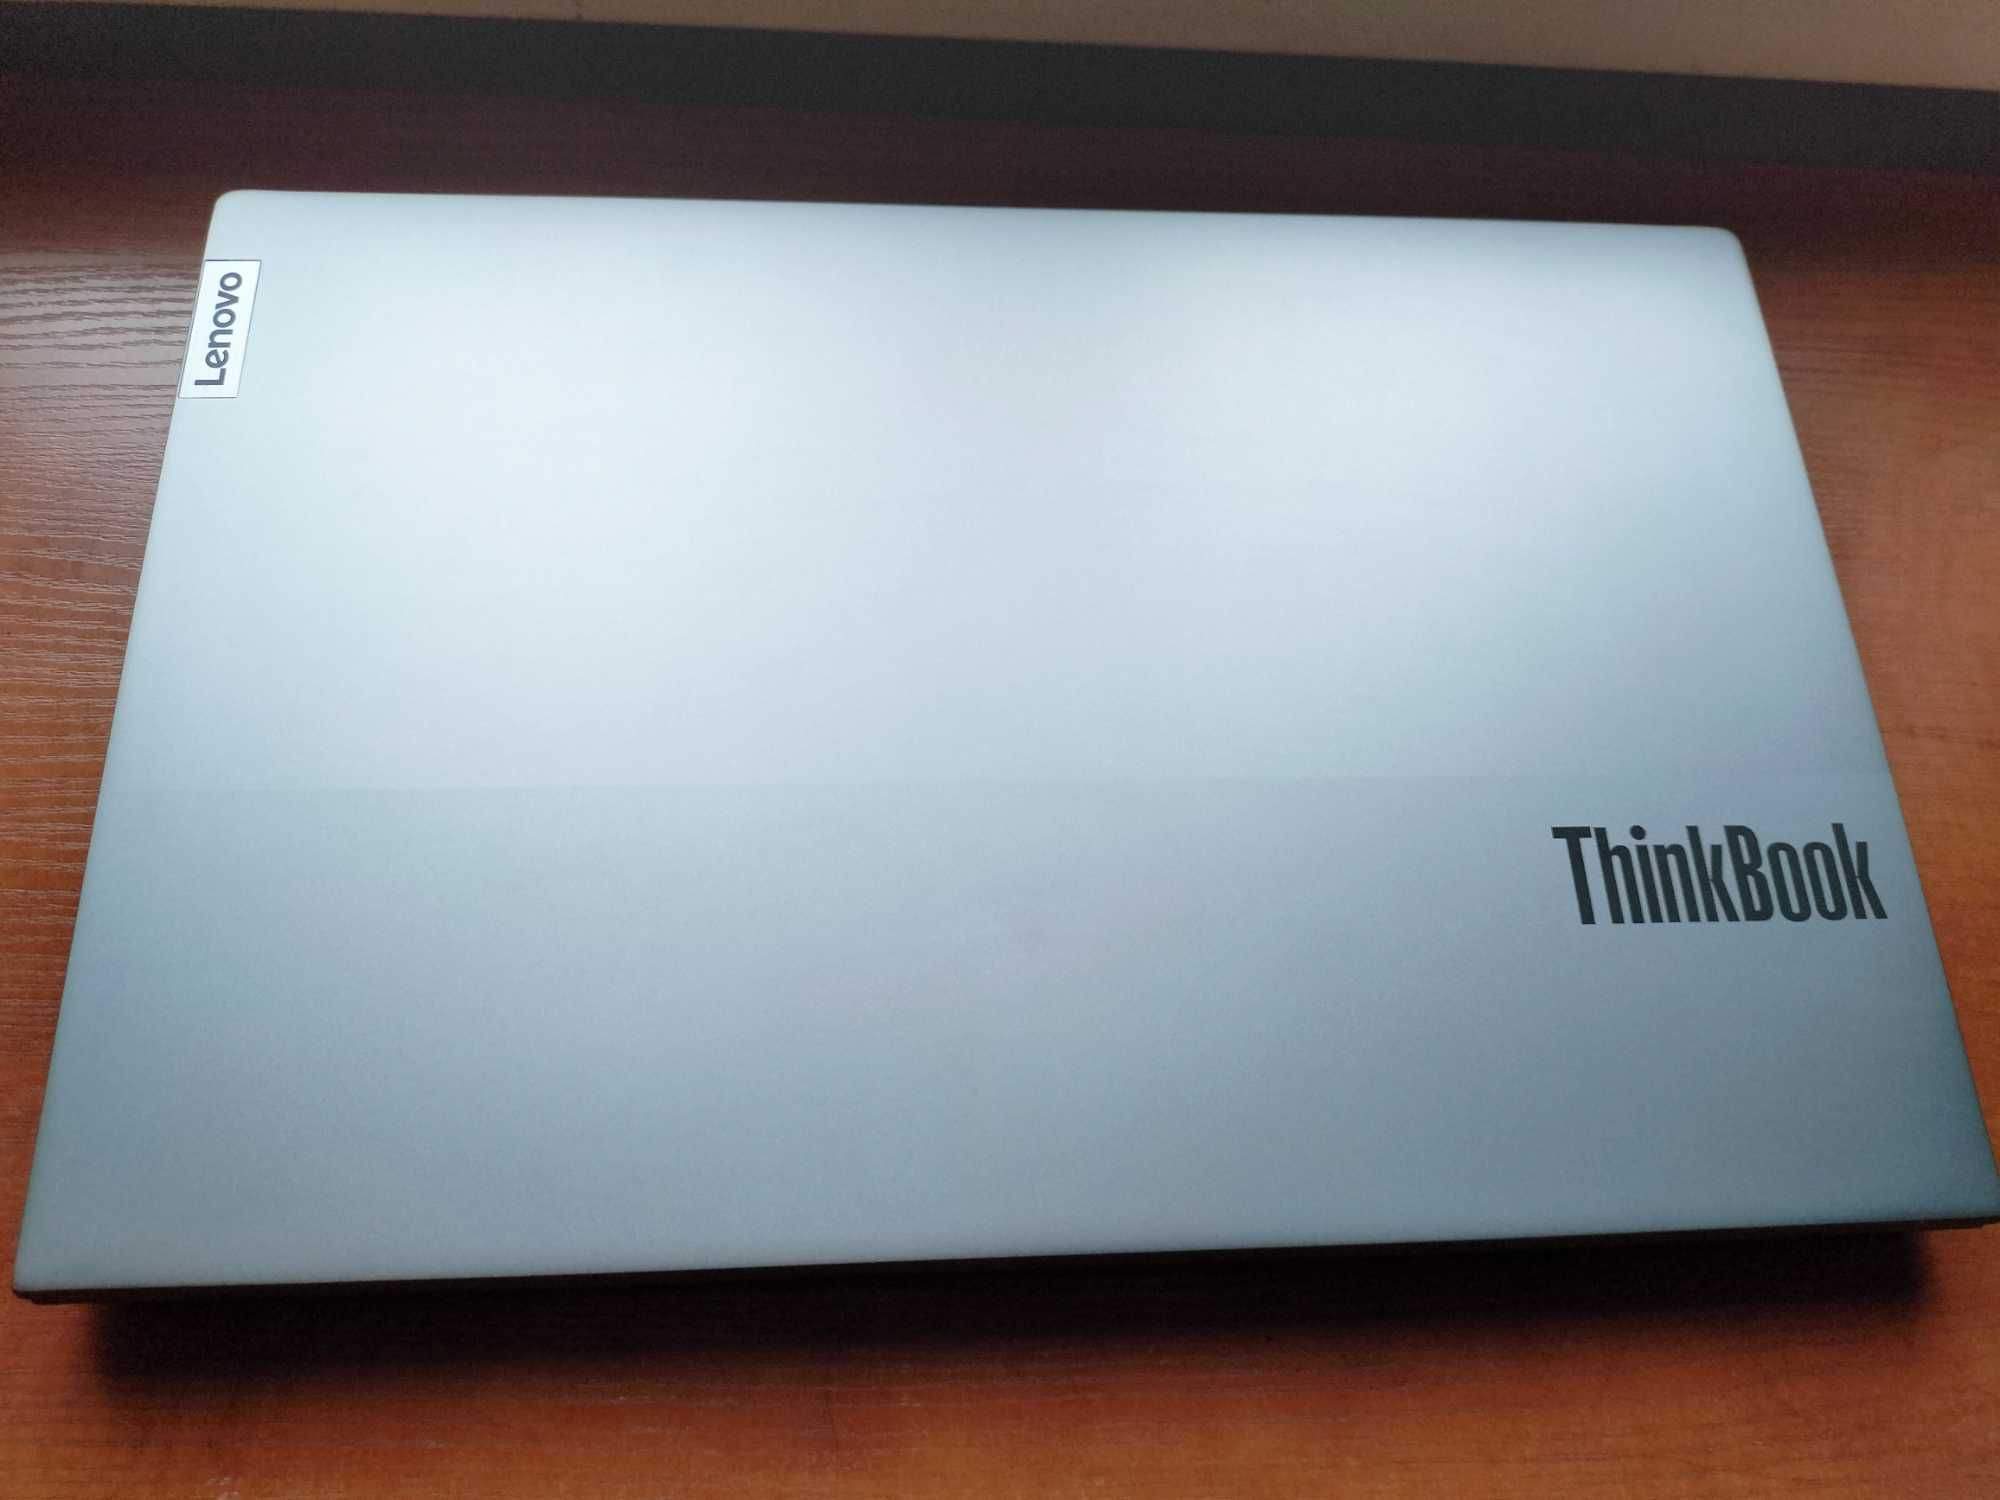 Новый Lenovo ThinkBook 15 Гарантия 4 года